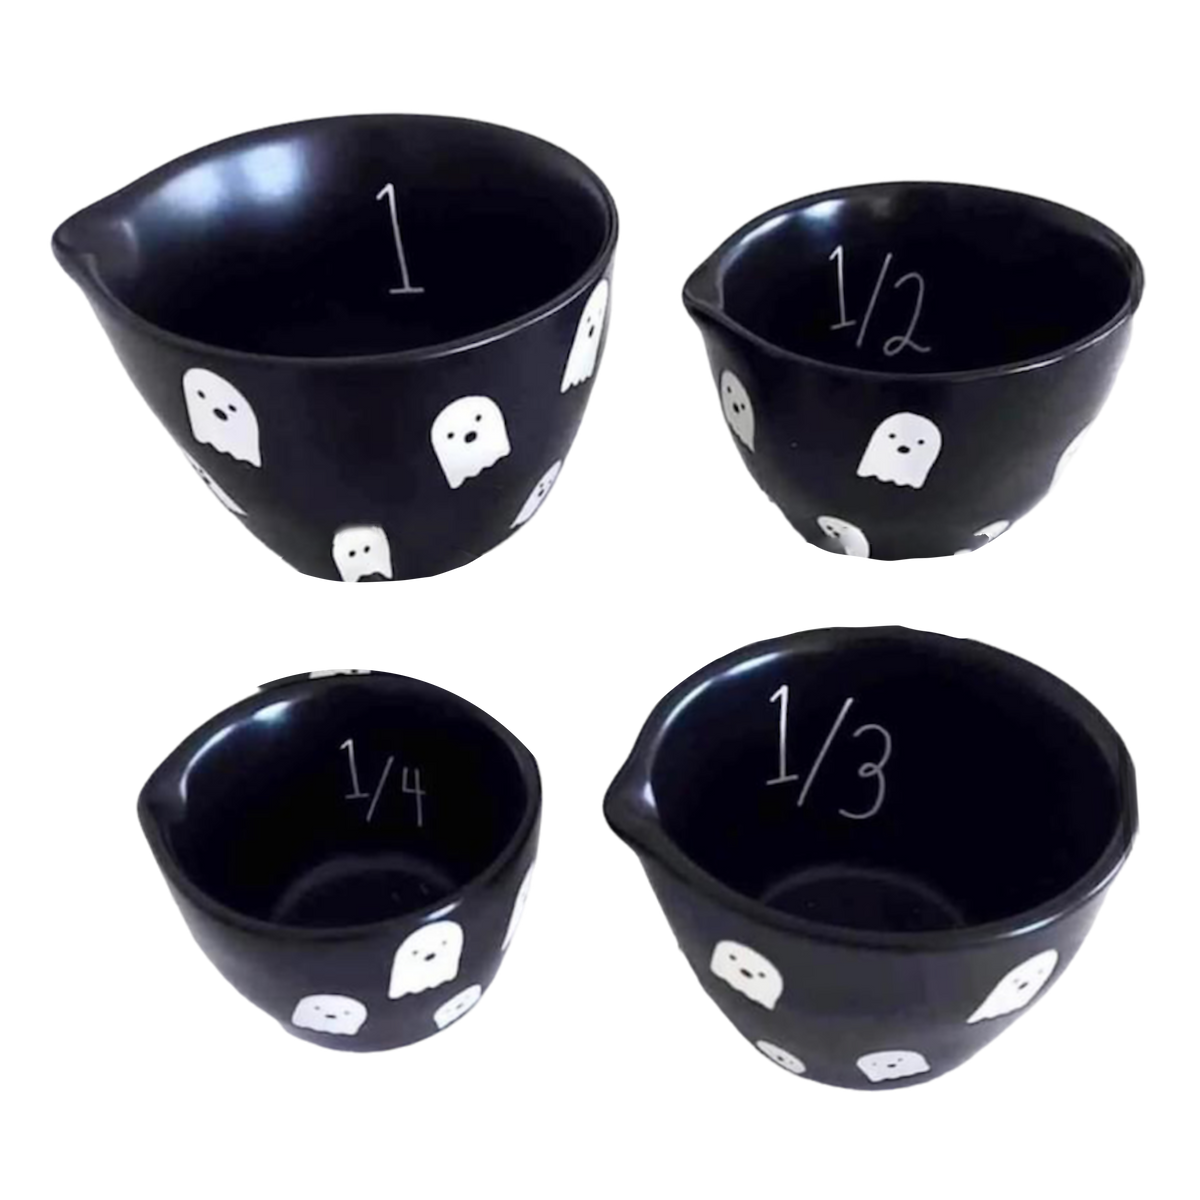 Black Rae Dunn Measuring Cups, Set Of 4